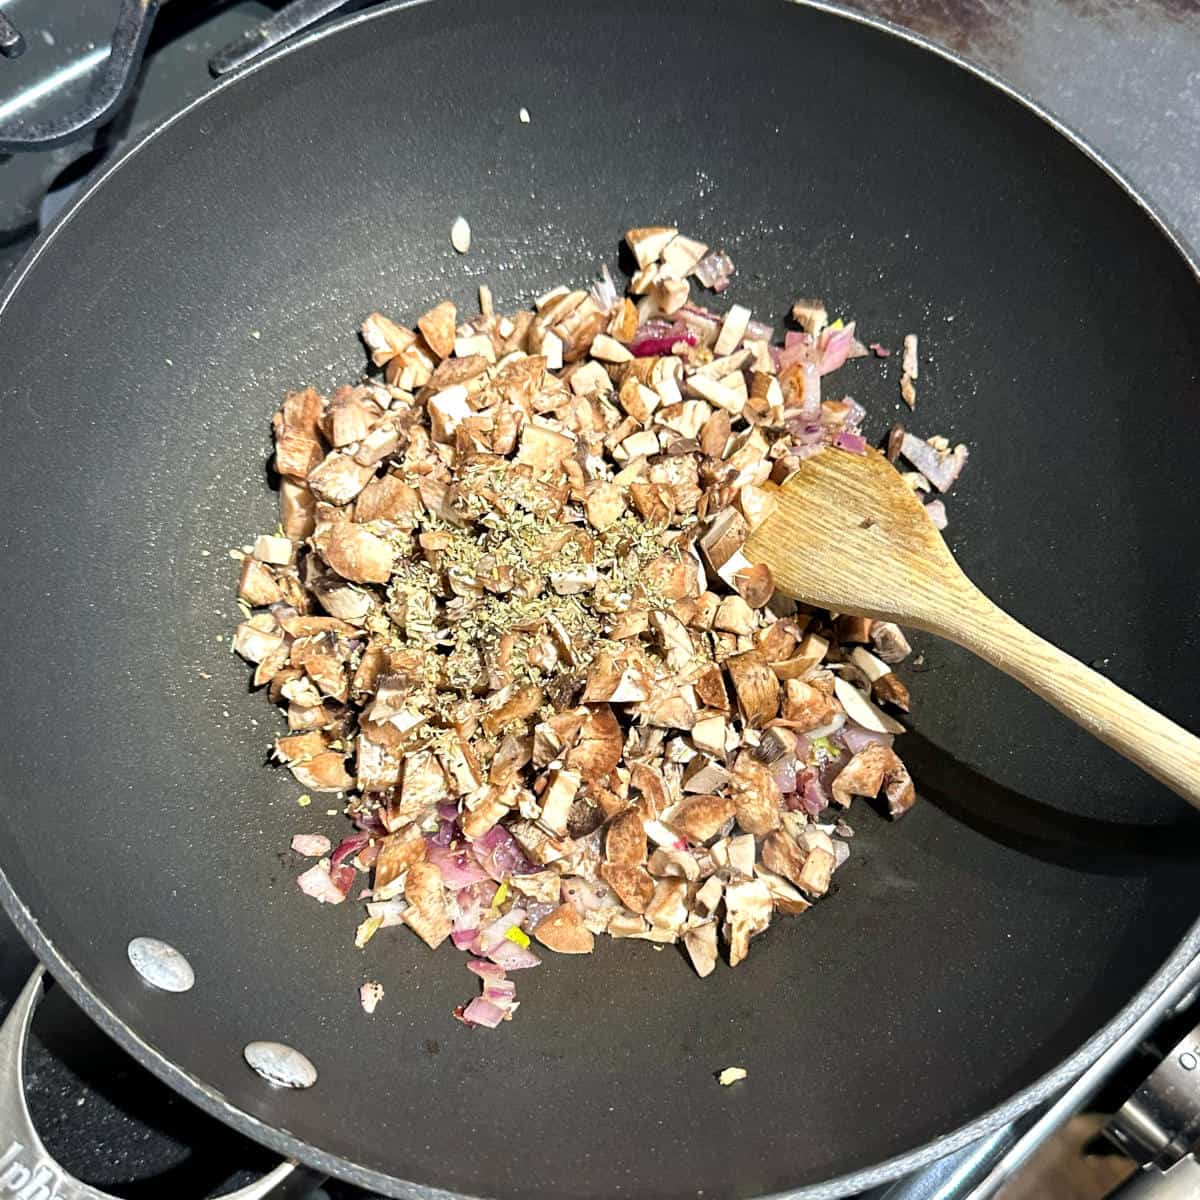 Mushroom stems, rosemary and oregano added to wok with garlic and onions.